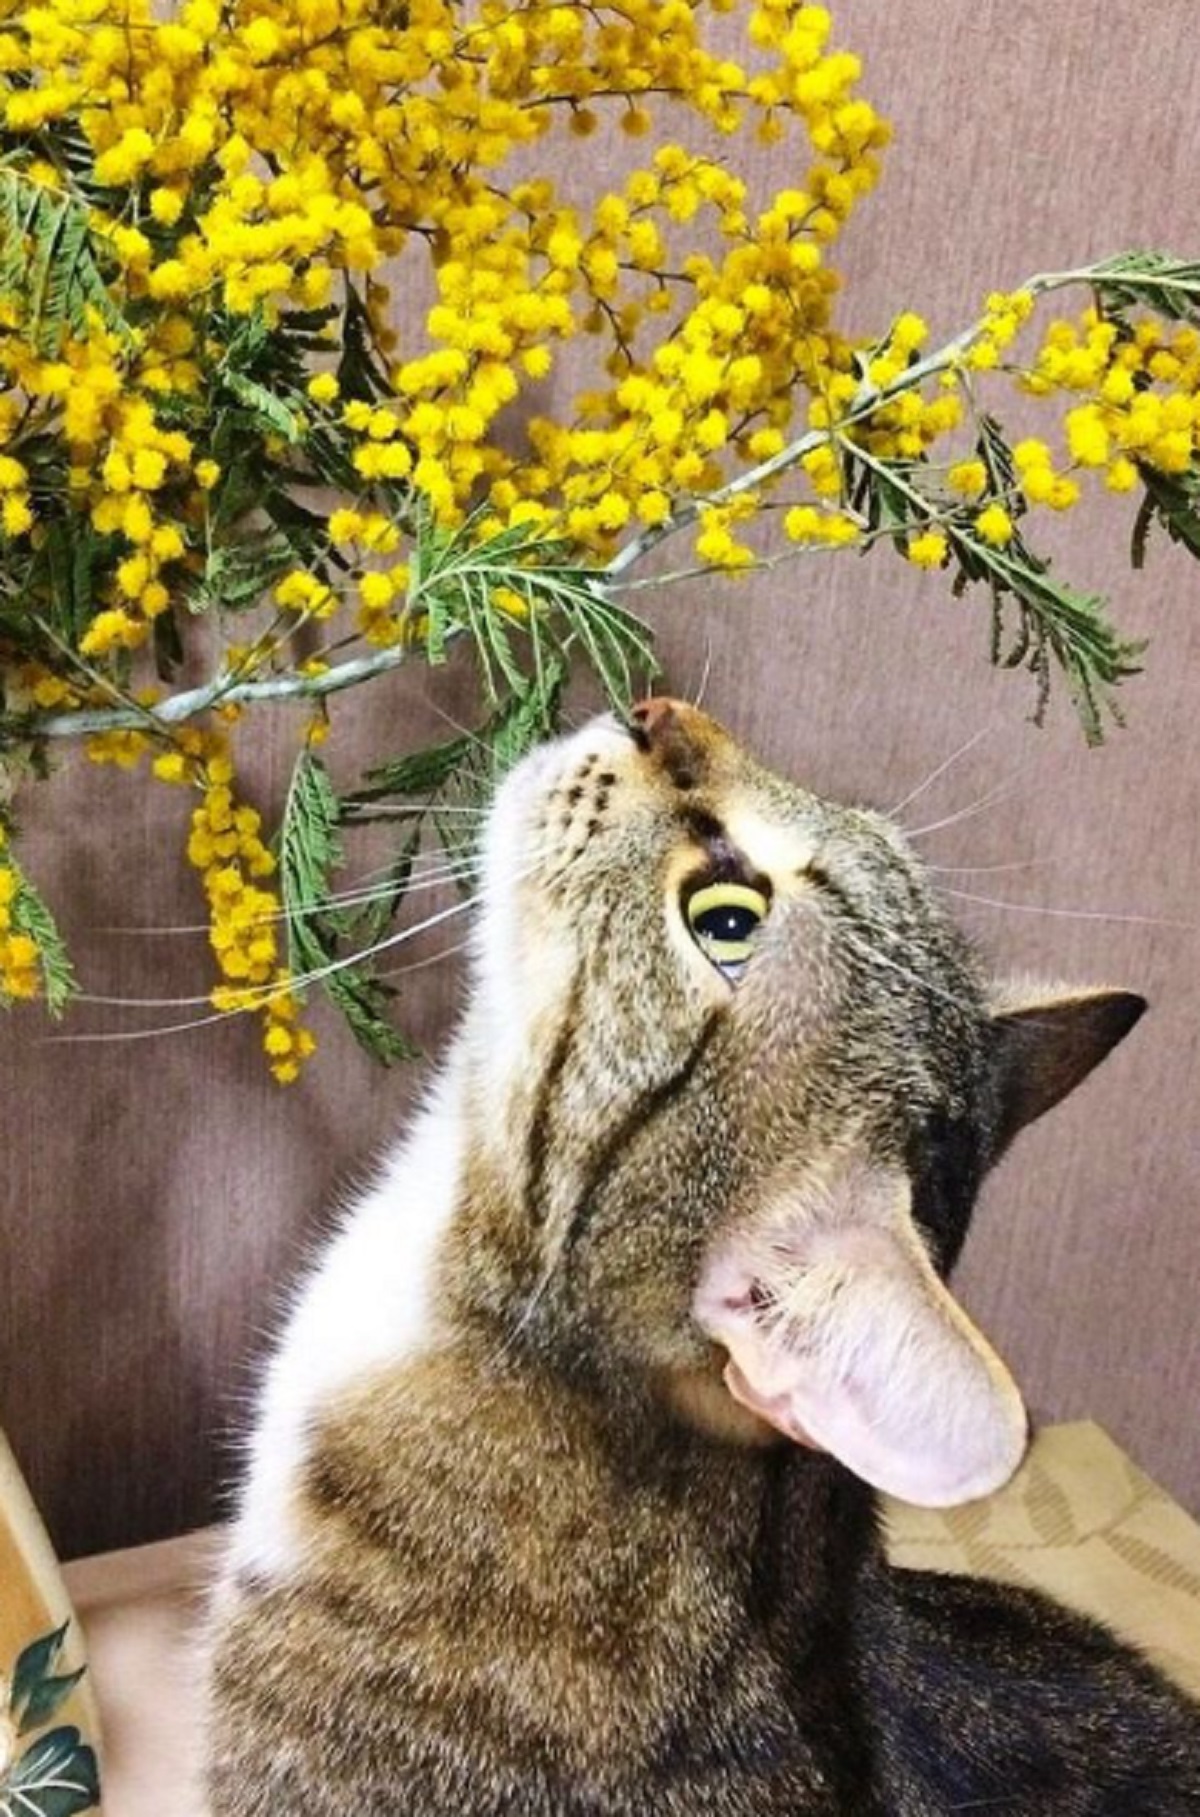 Halaman Rumah Sering Di Berakin Kucing Liar? Gunakan 7 Tanaman Pengusir Kucing Liar Yang Ampuh Usir Kucing